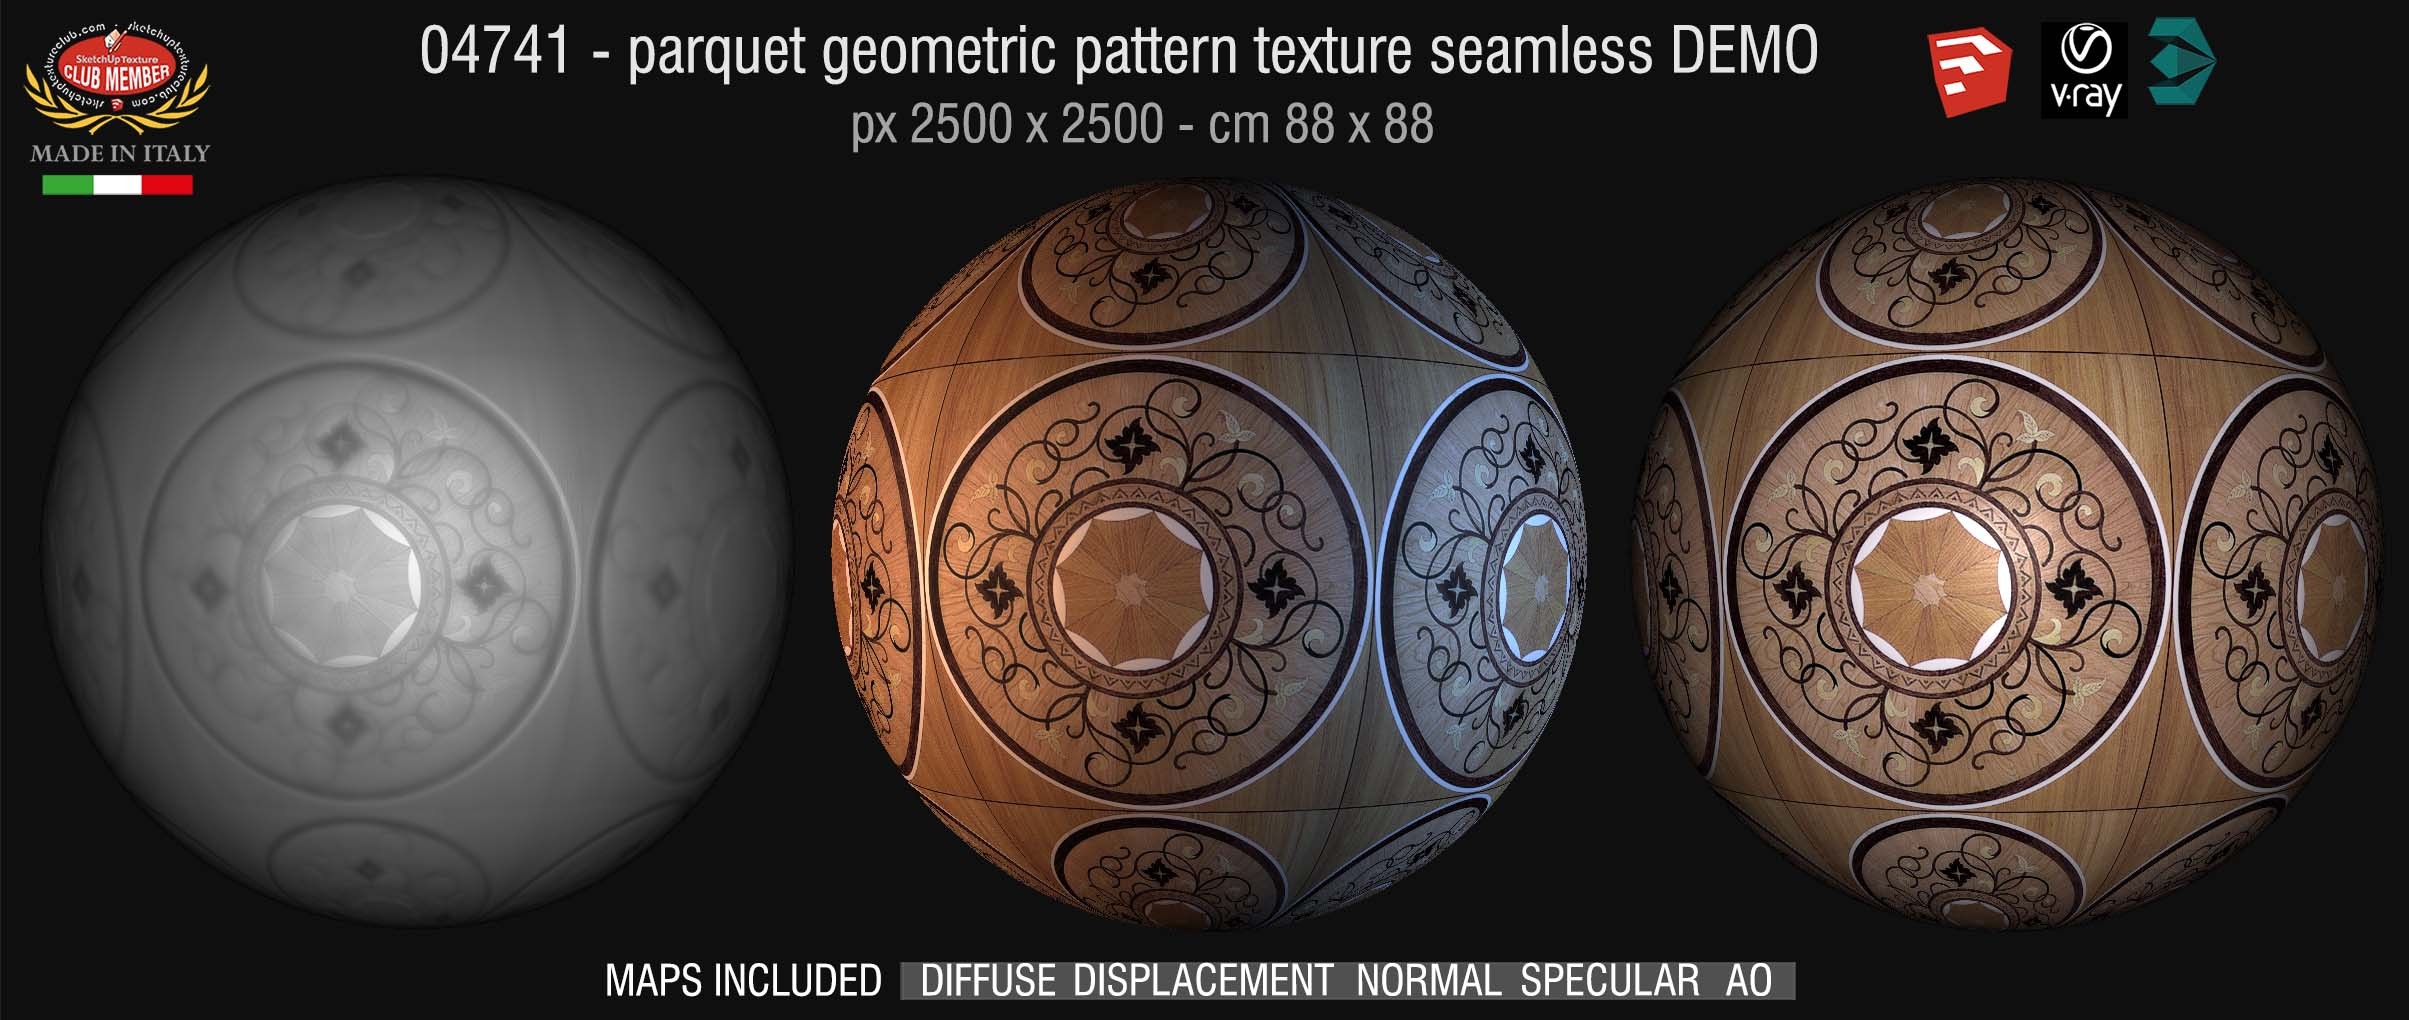 04741 HR Parquet geometric pattern texture seamless + maps DEMO